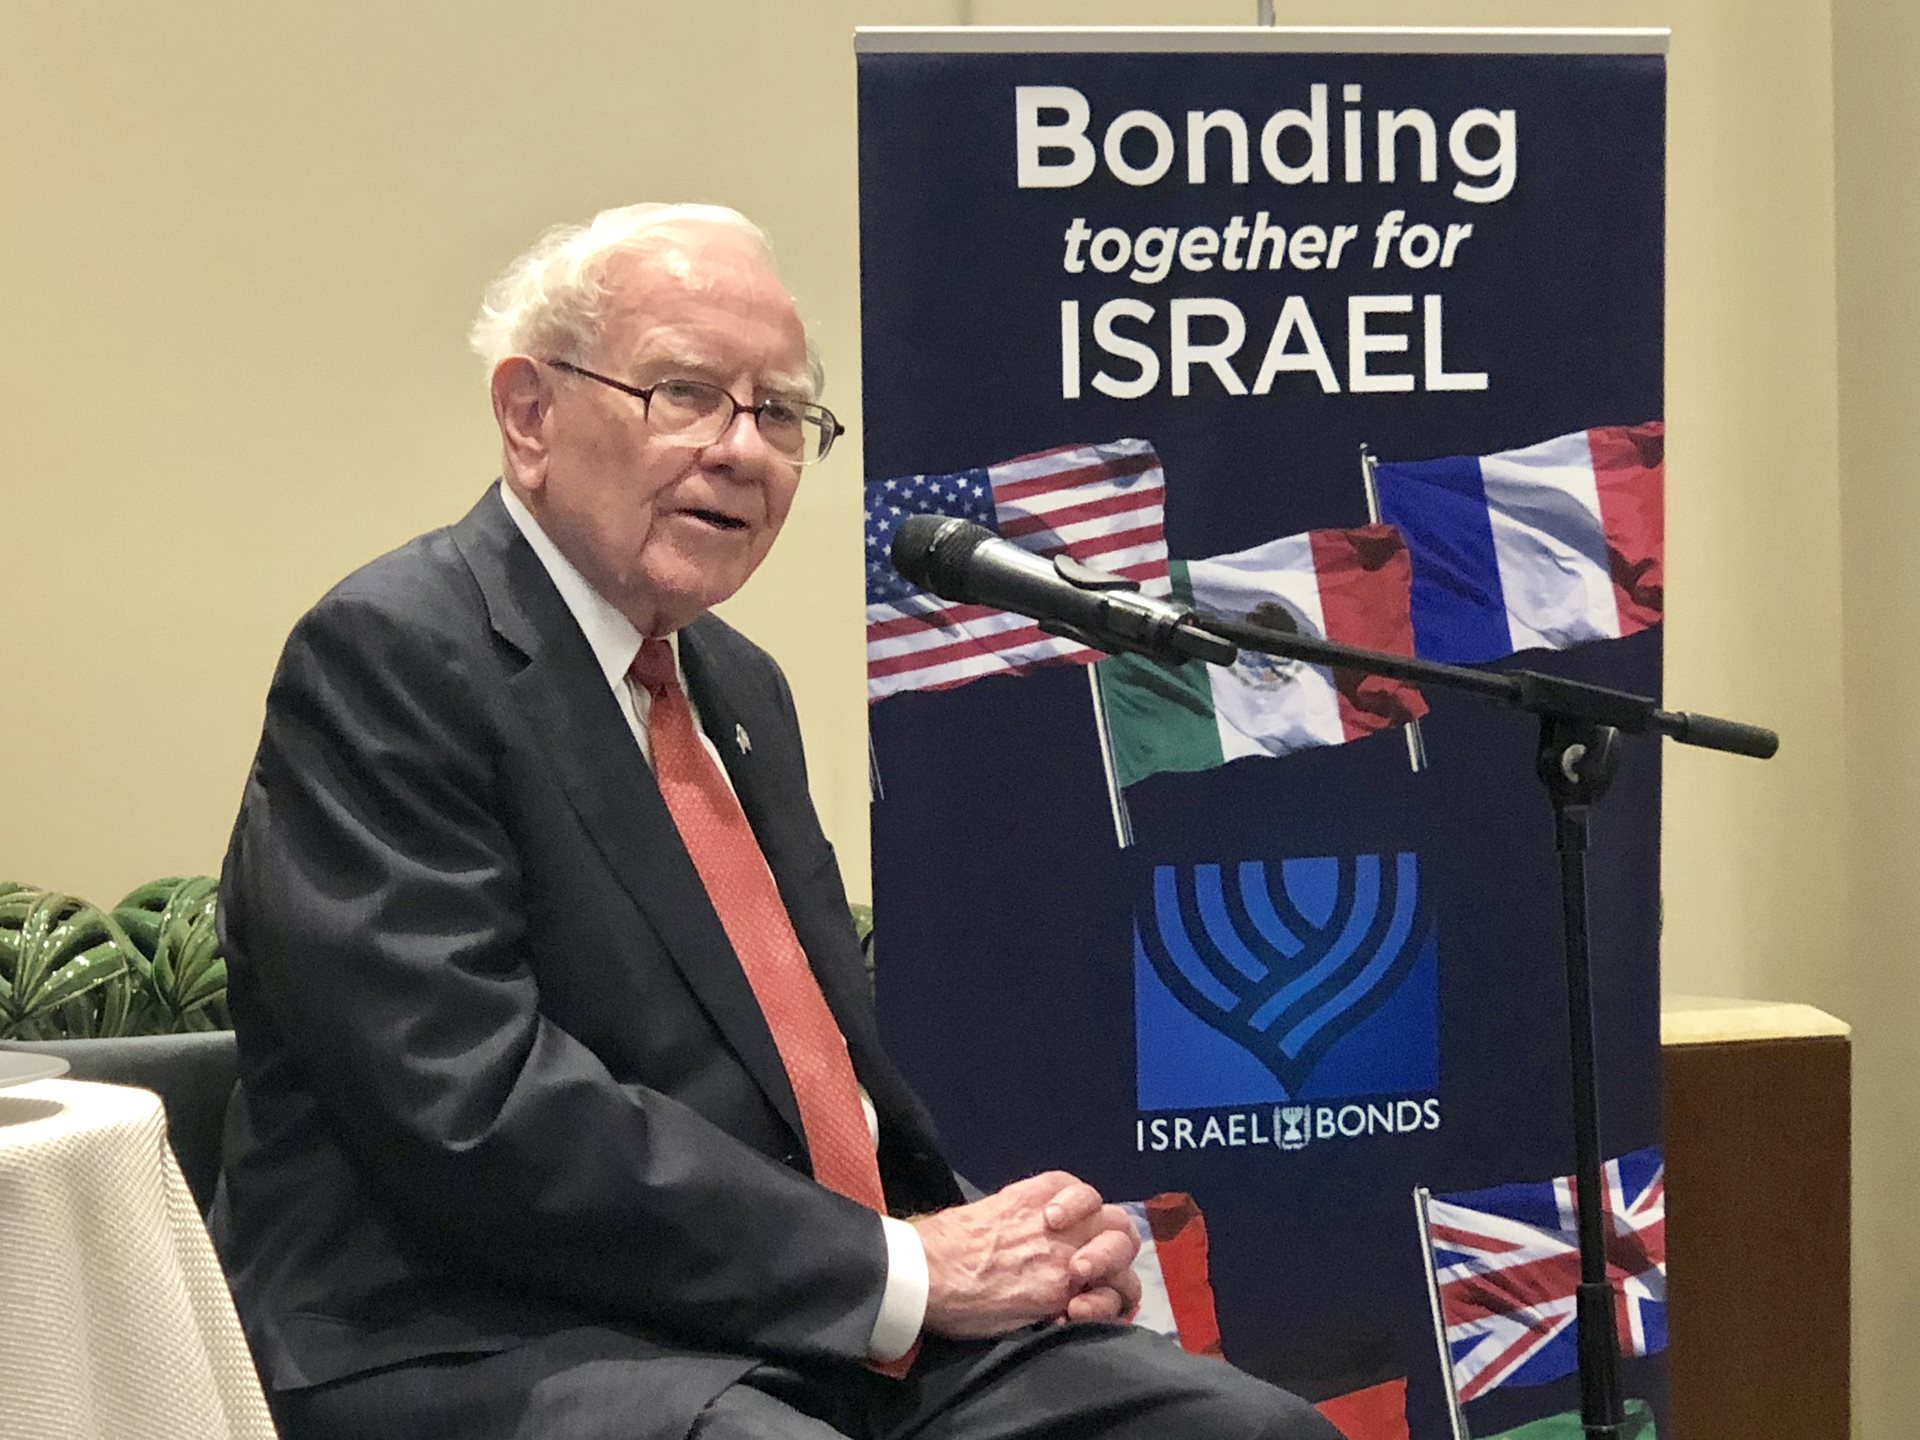 Warren Buffett's New Endeavor: Investing in Israel Bonds